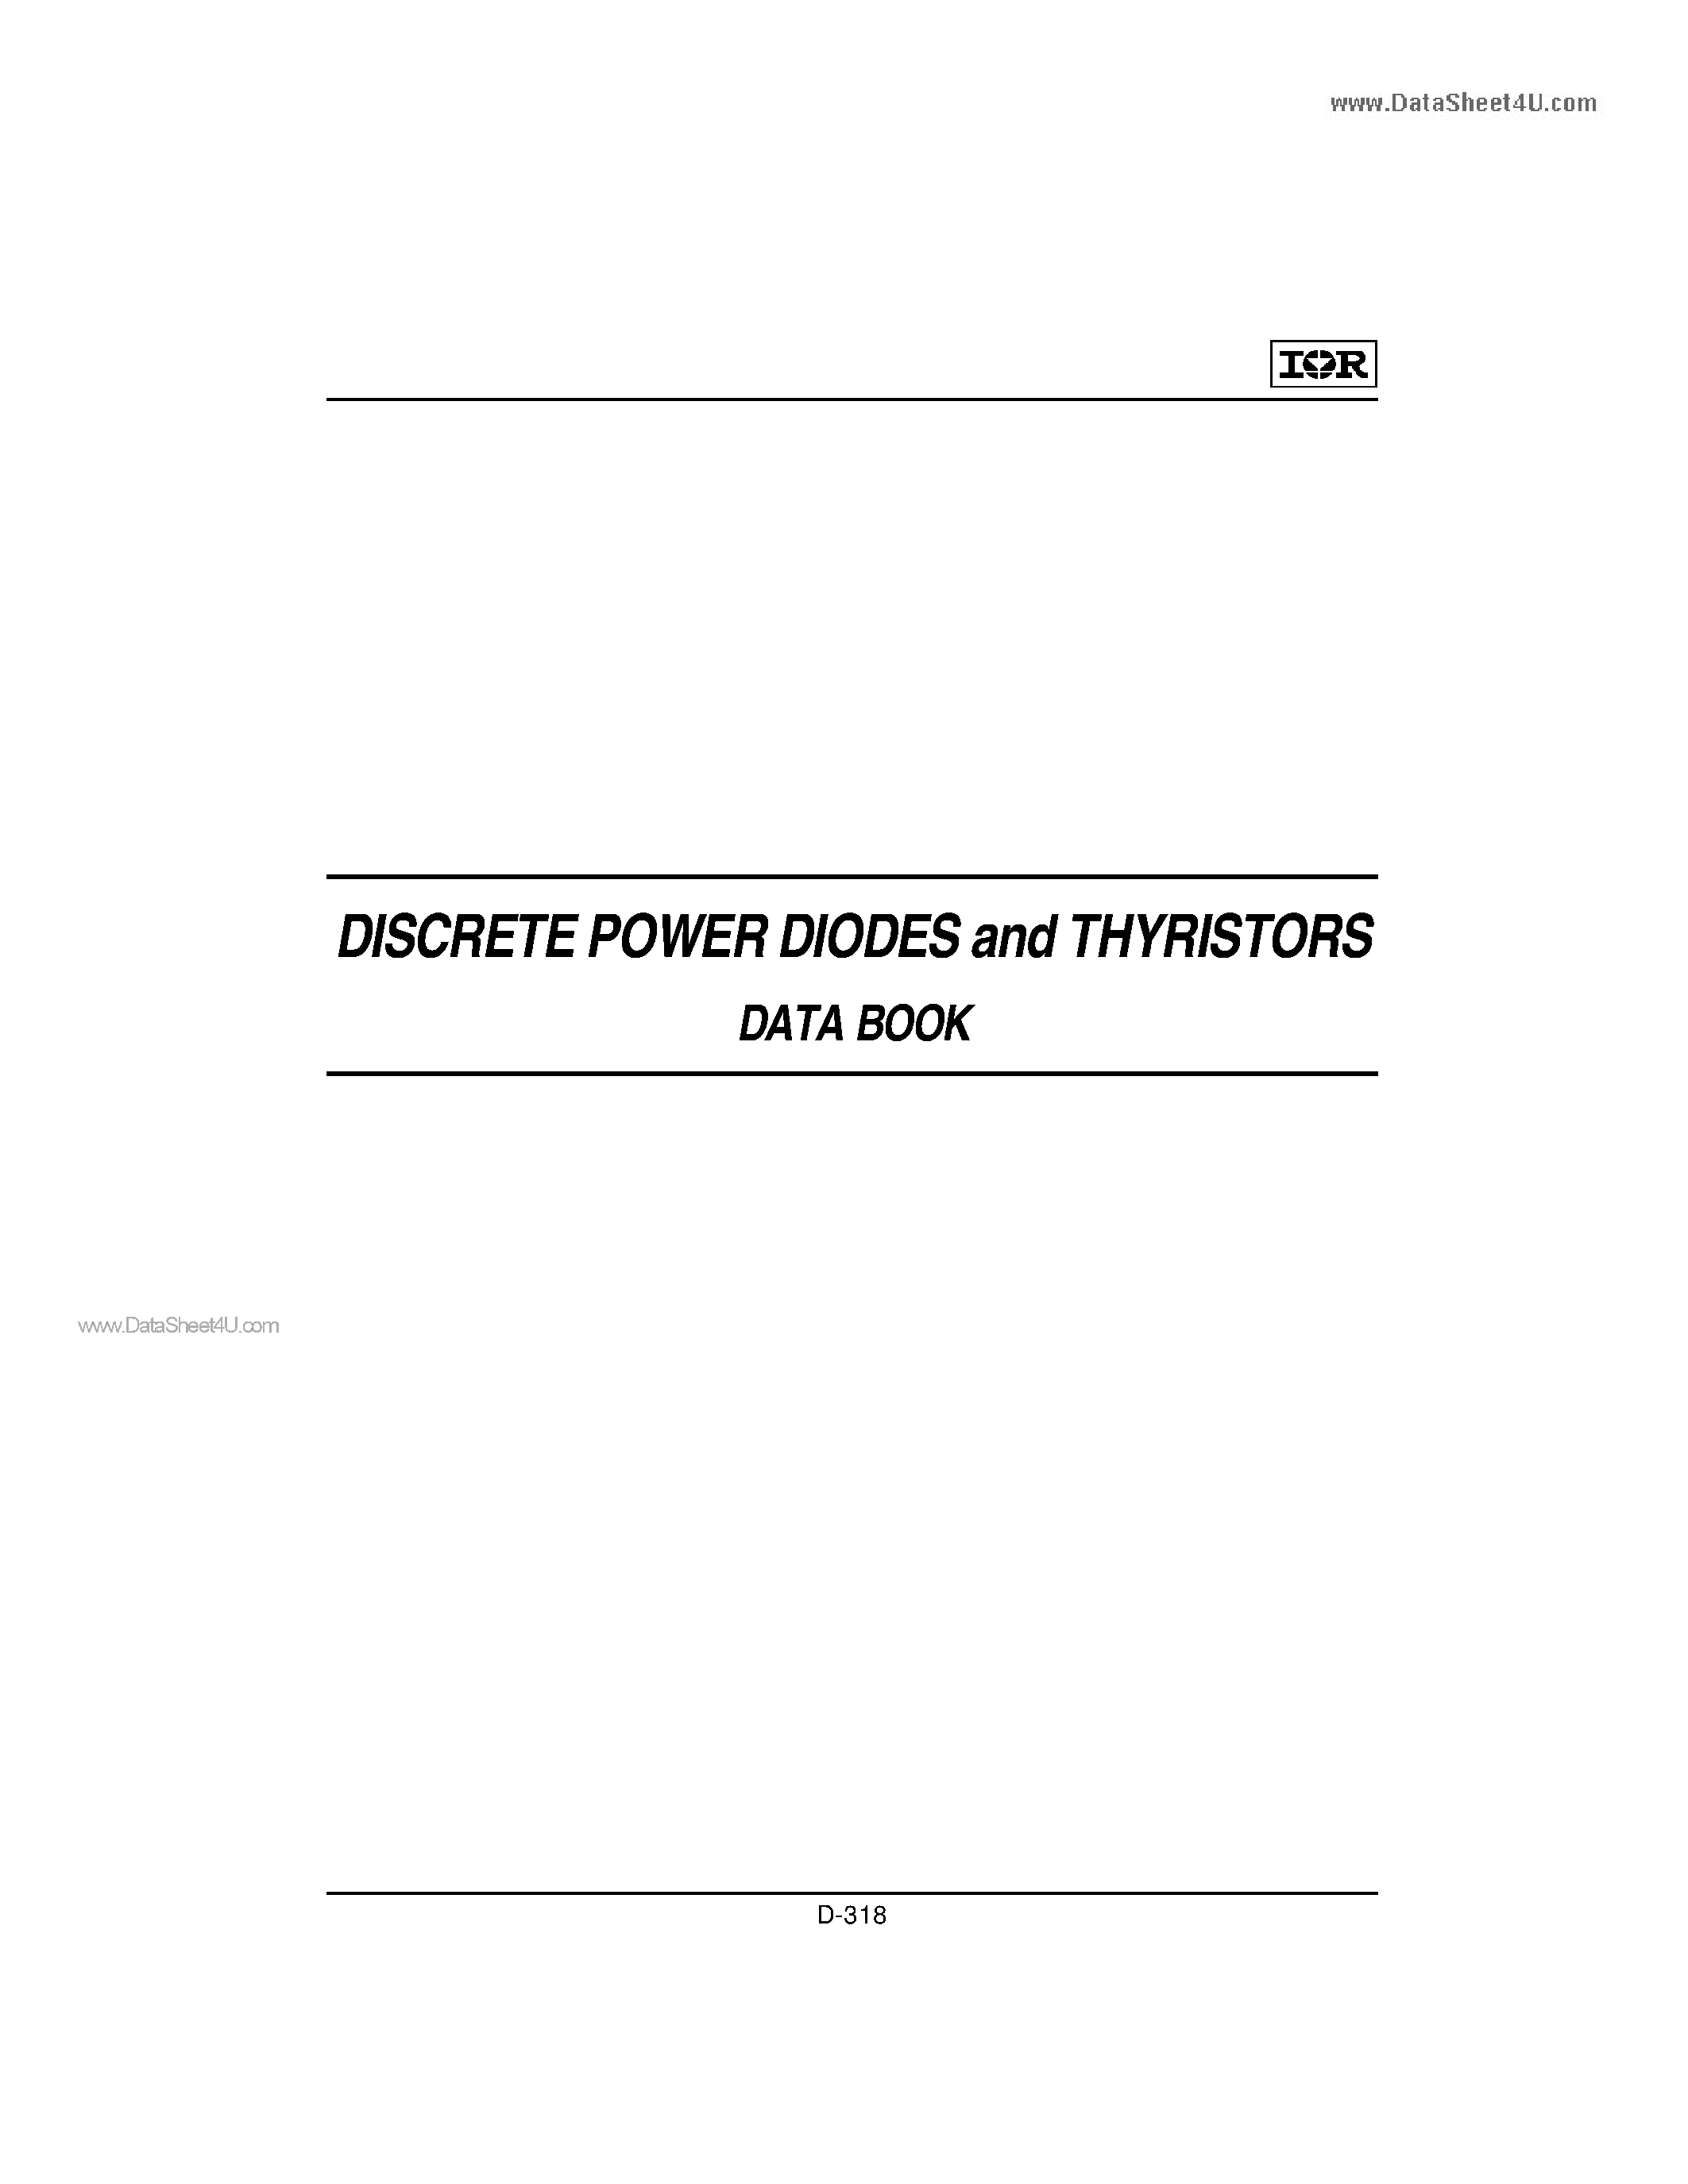 Даташит ST330C - PHASE CONTROL THYRISTORS Hockey Puk Version страница 1